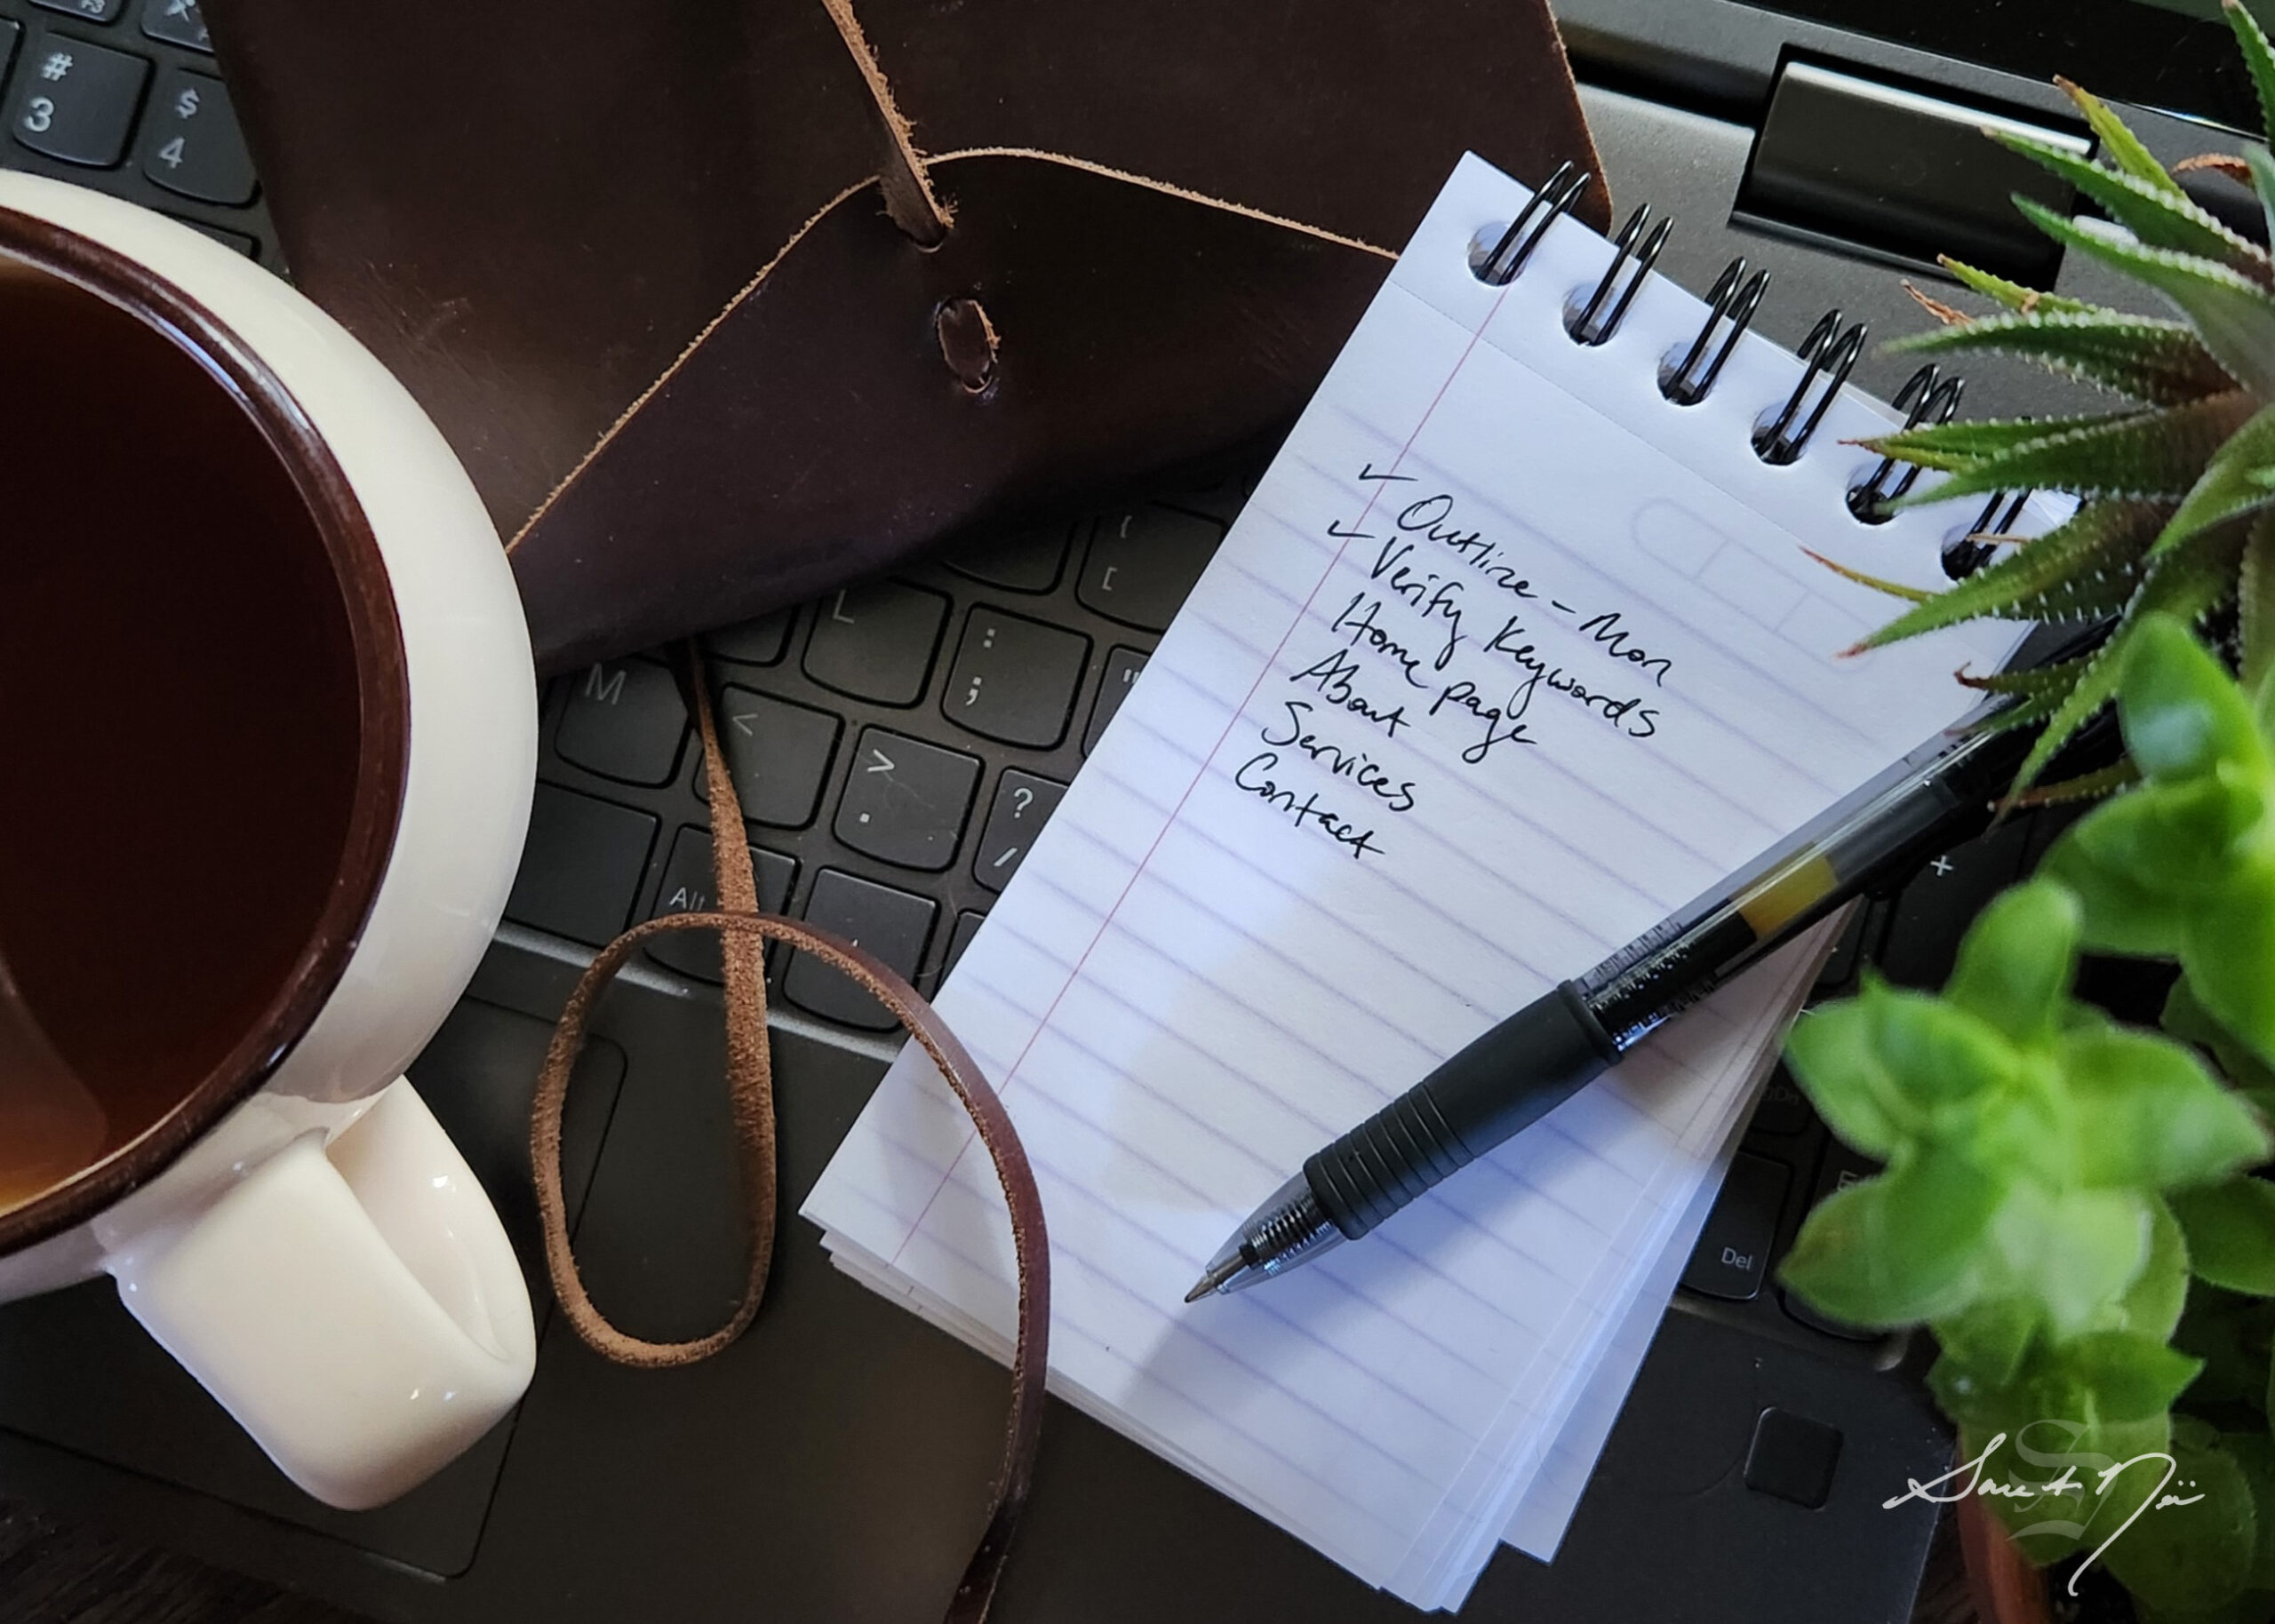 Freelance writer's checklist and notebook